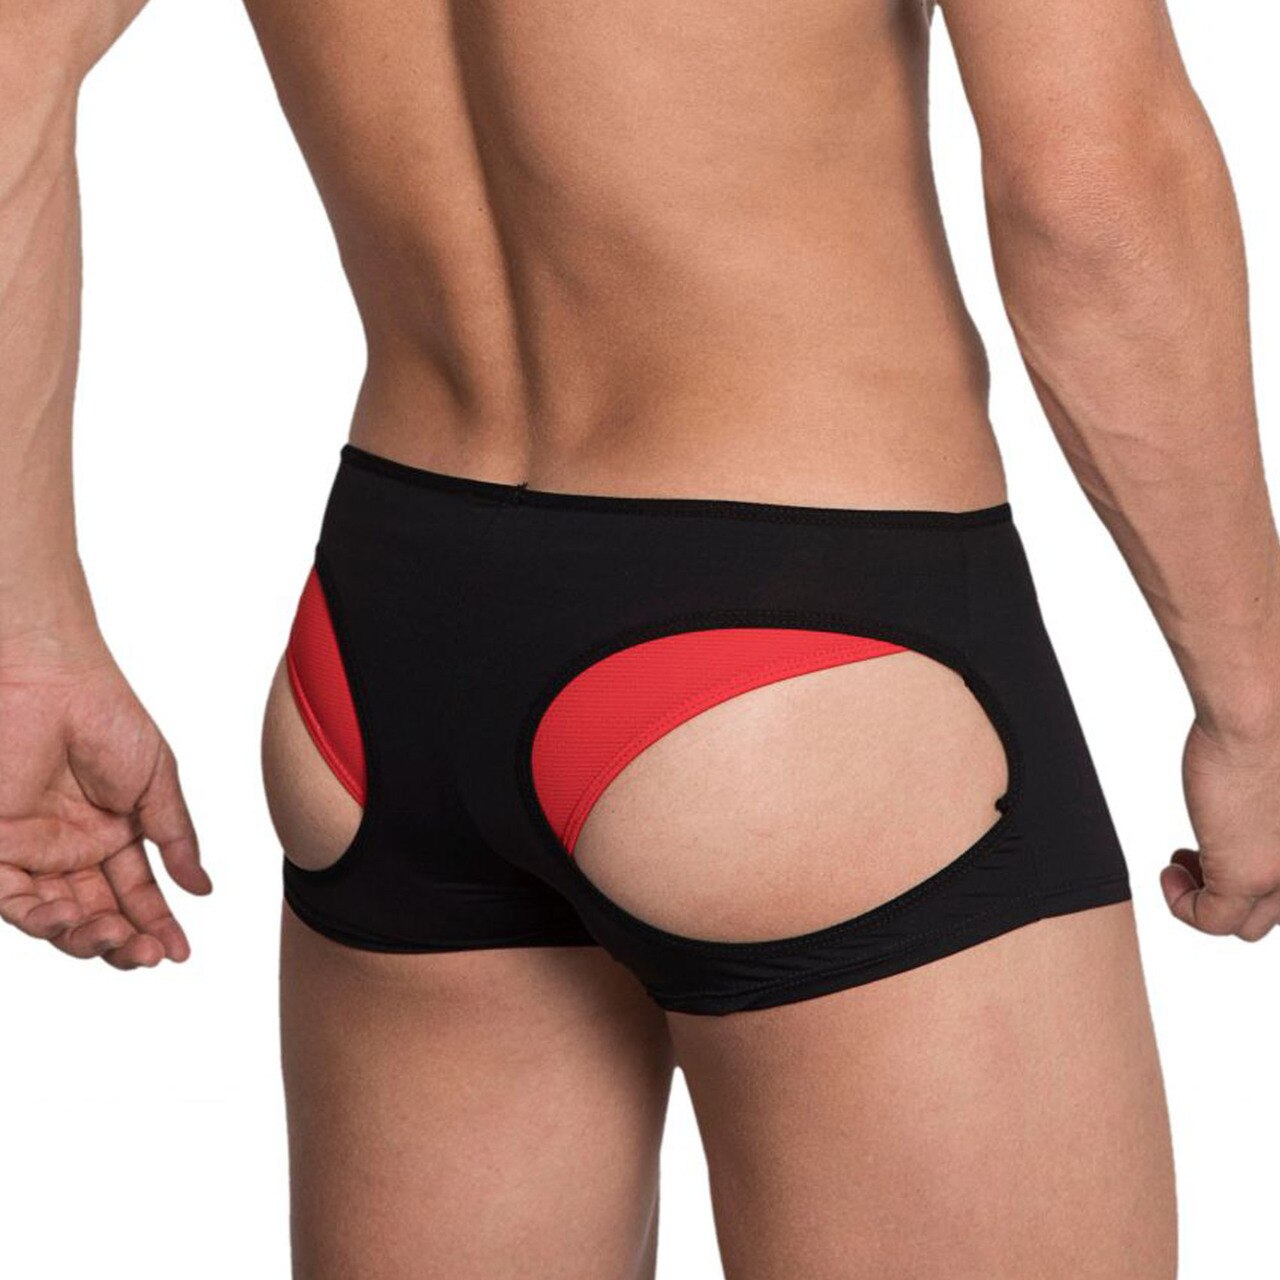 SALE - Mens Hidden Seduction Open Front & Back Hot Pants Shorts Black & Red